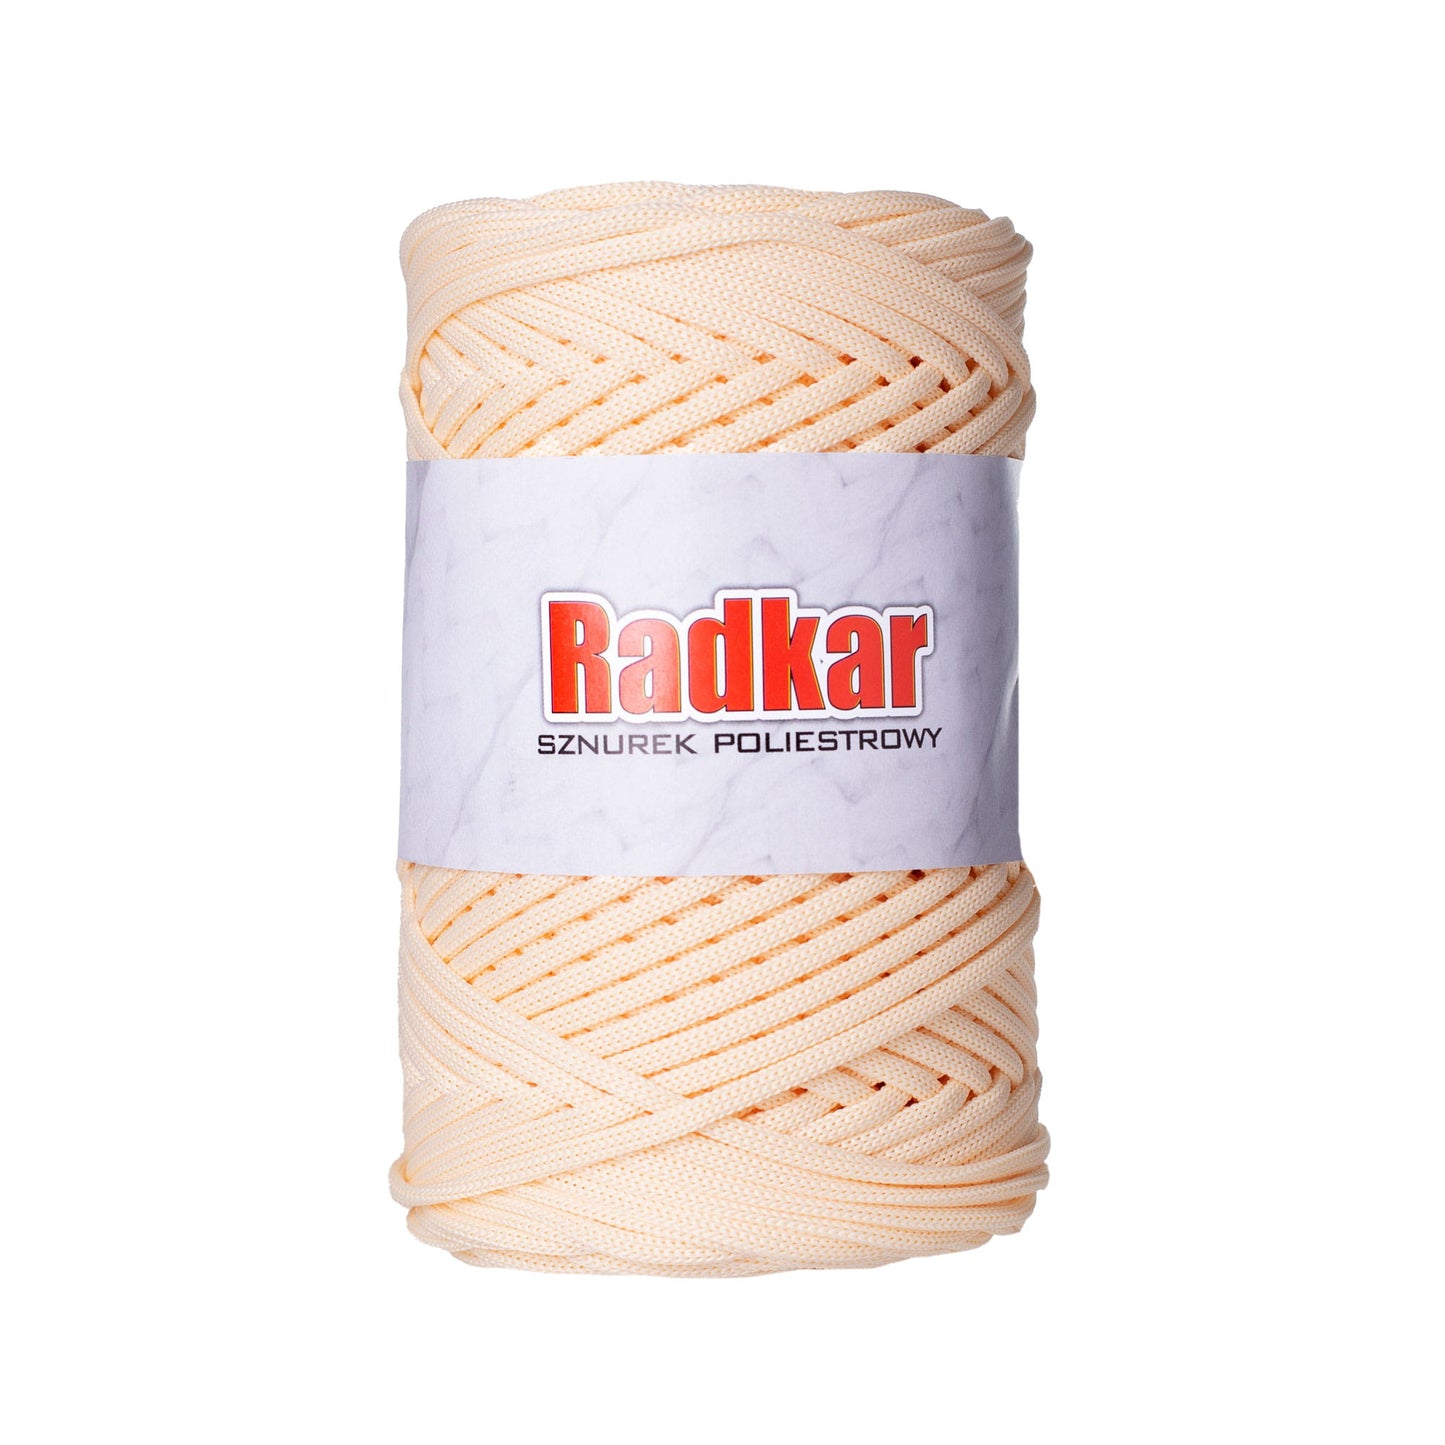 3mm polyester braided cord radkar macrame handmade project diy